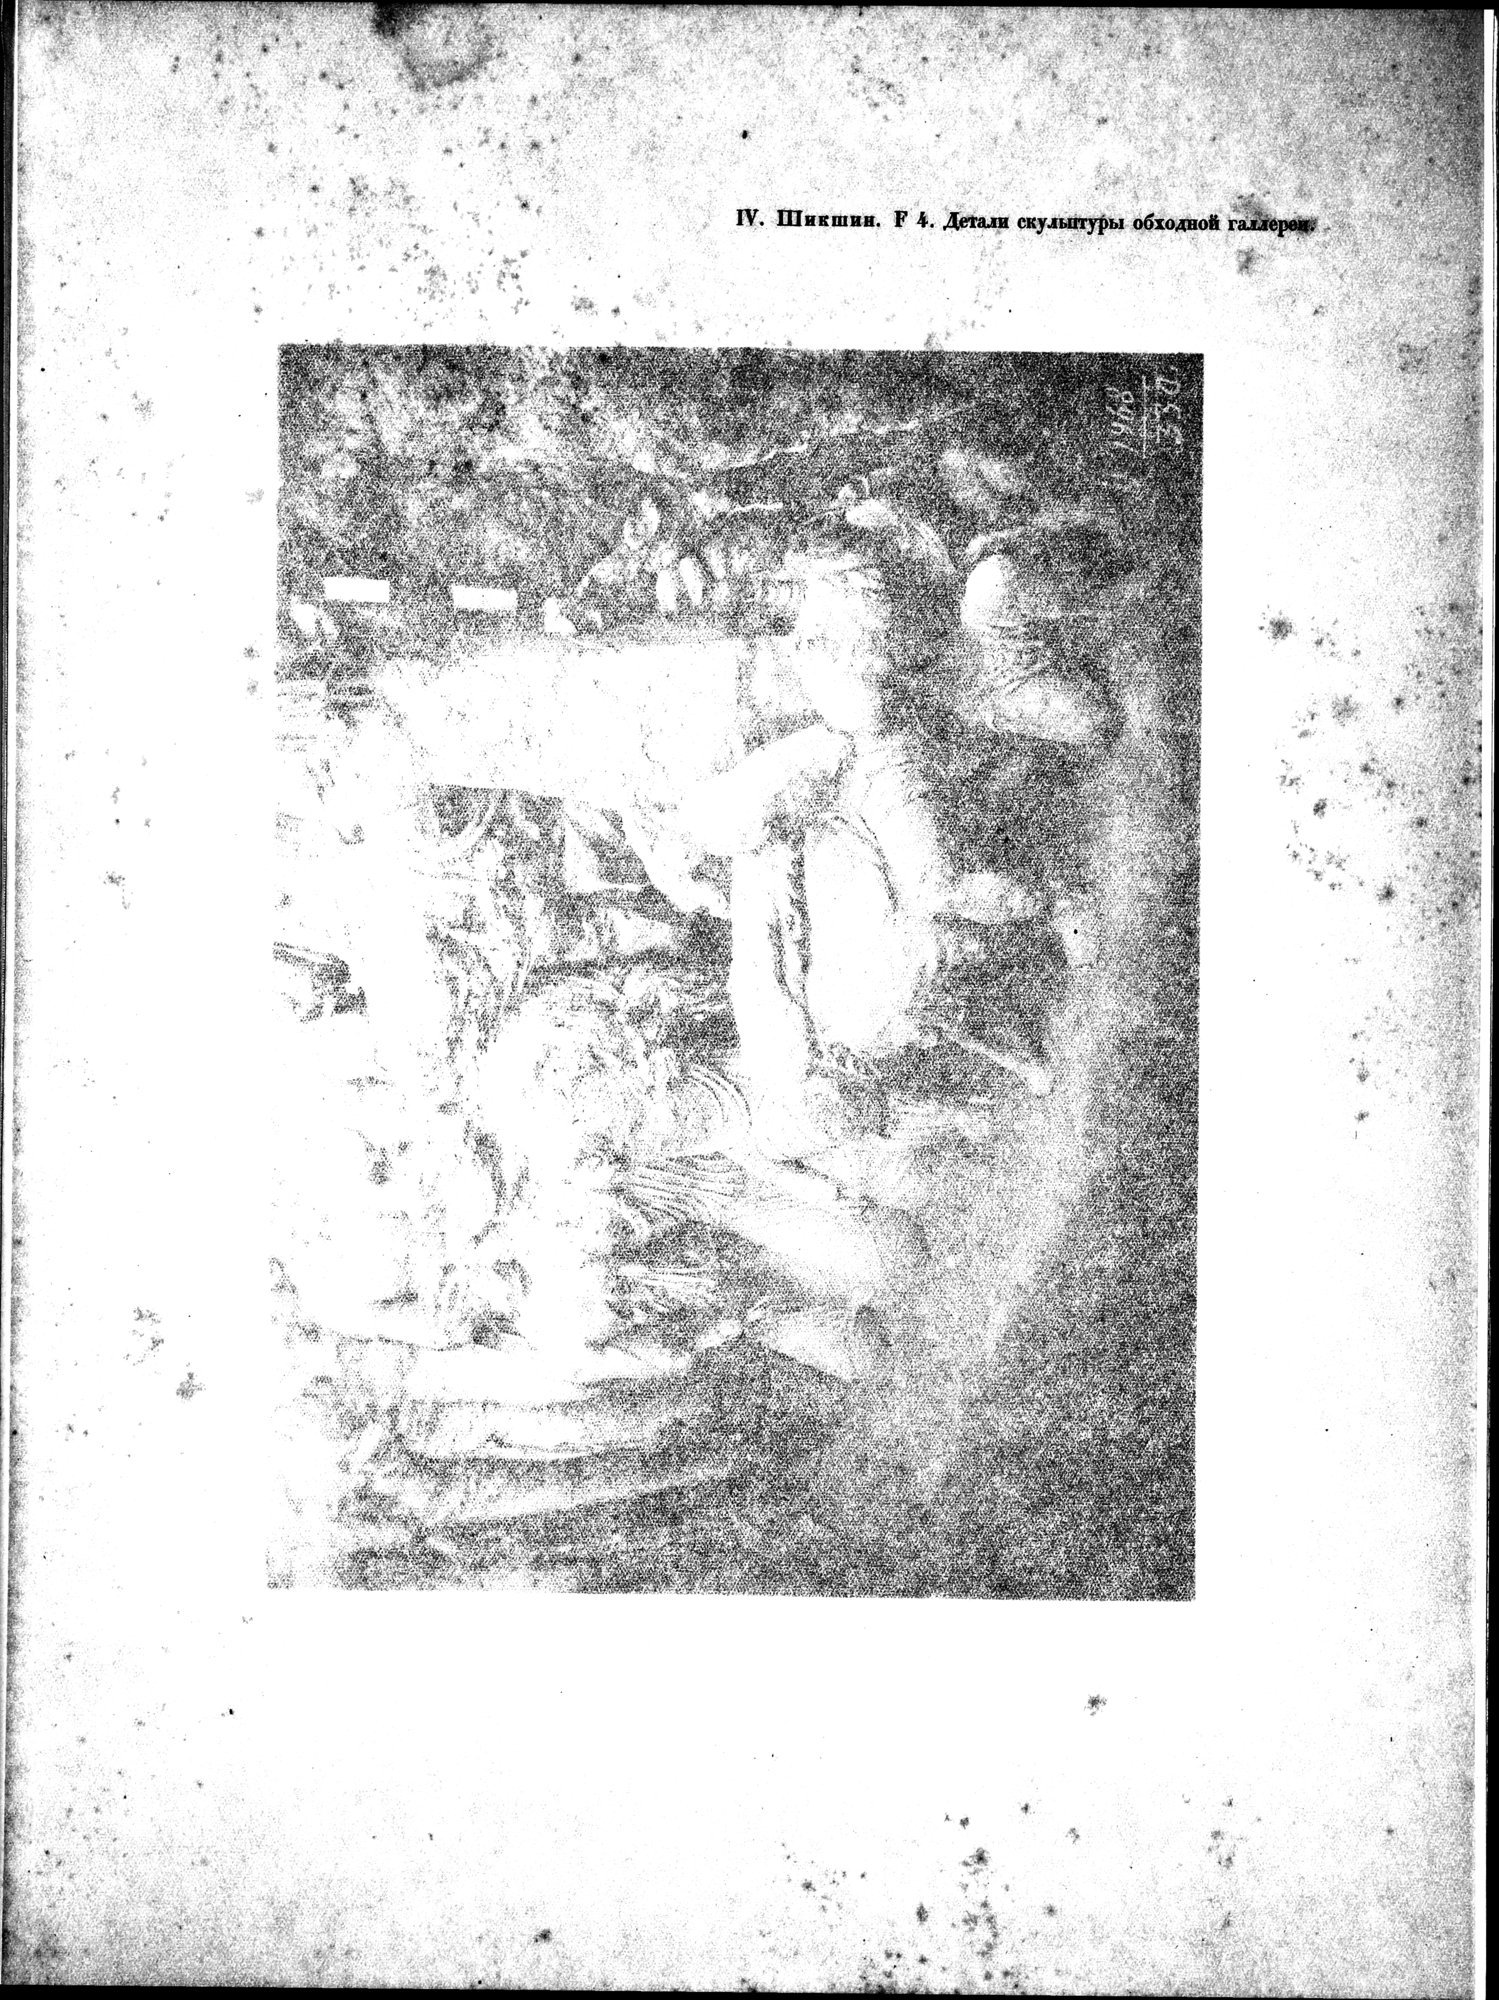 Russkaia Turkestanskaia Ekspeditsiia, 1909-1910 goda : vol.1 / Page 115 (Grayscale High Resolution Image)